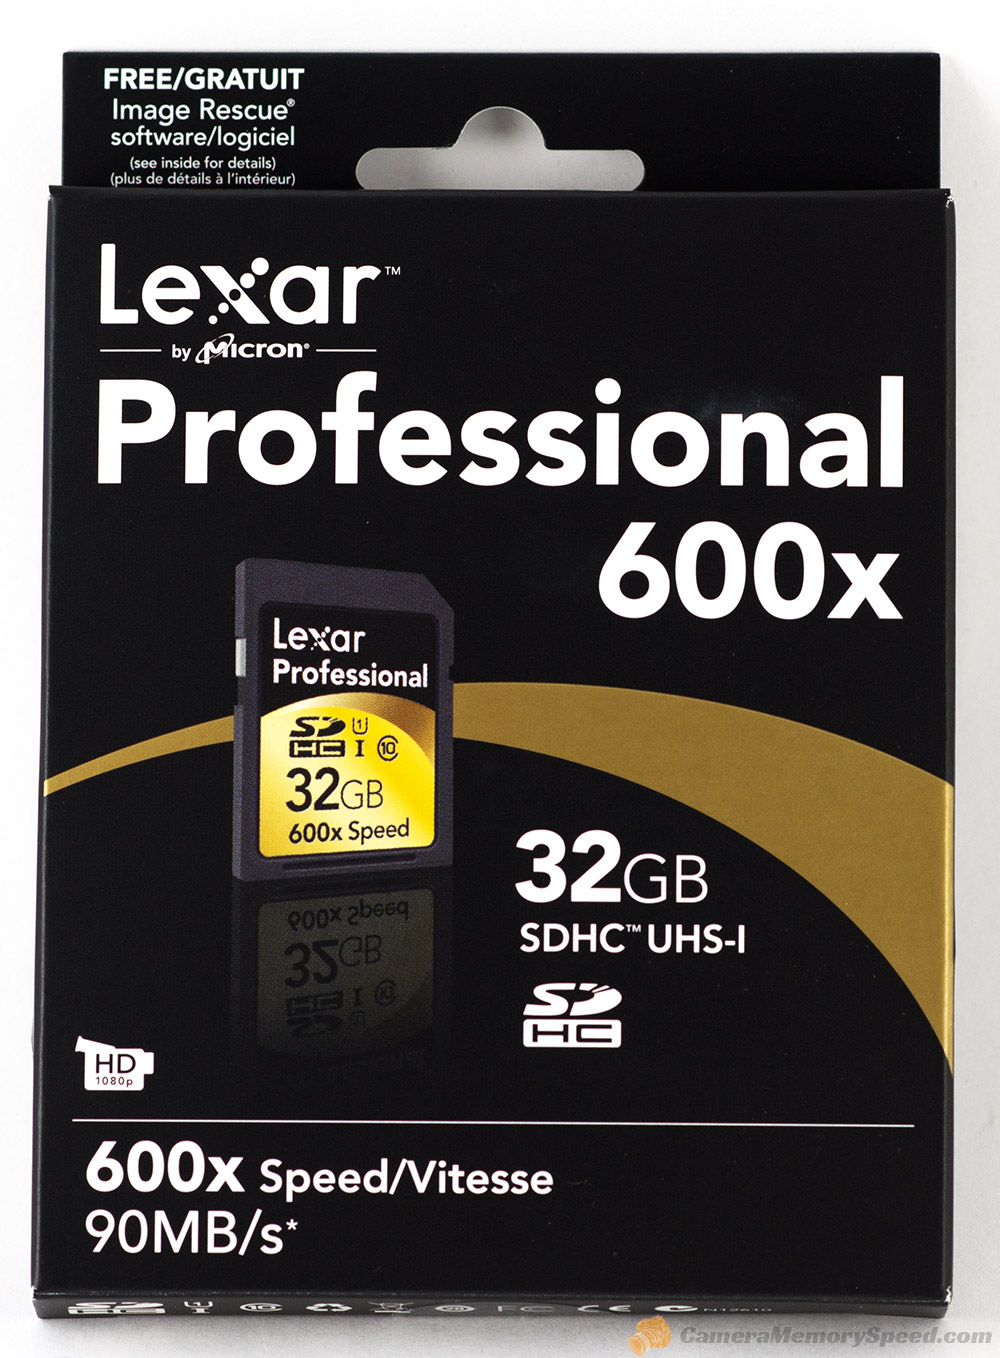 Lexar Professional 600x 32GB SDHC Memory Card - Camera Memory Speed